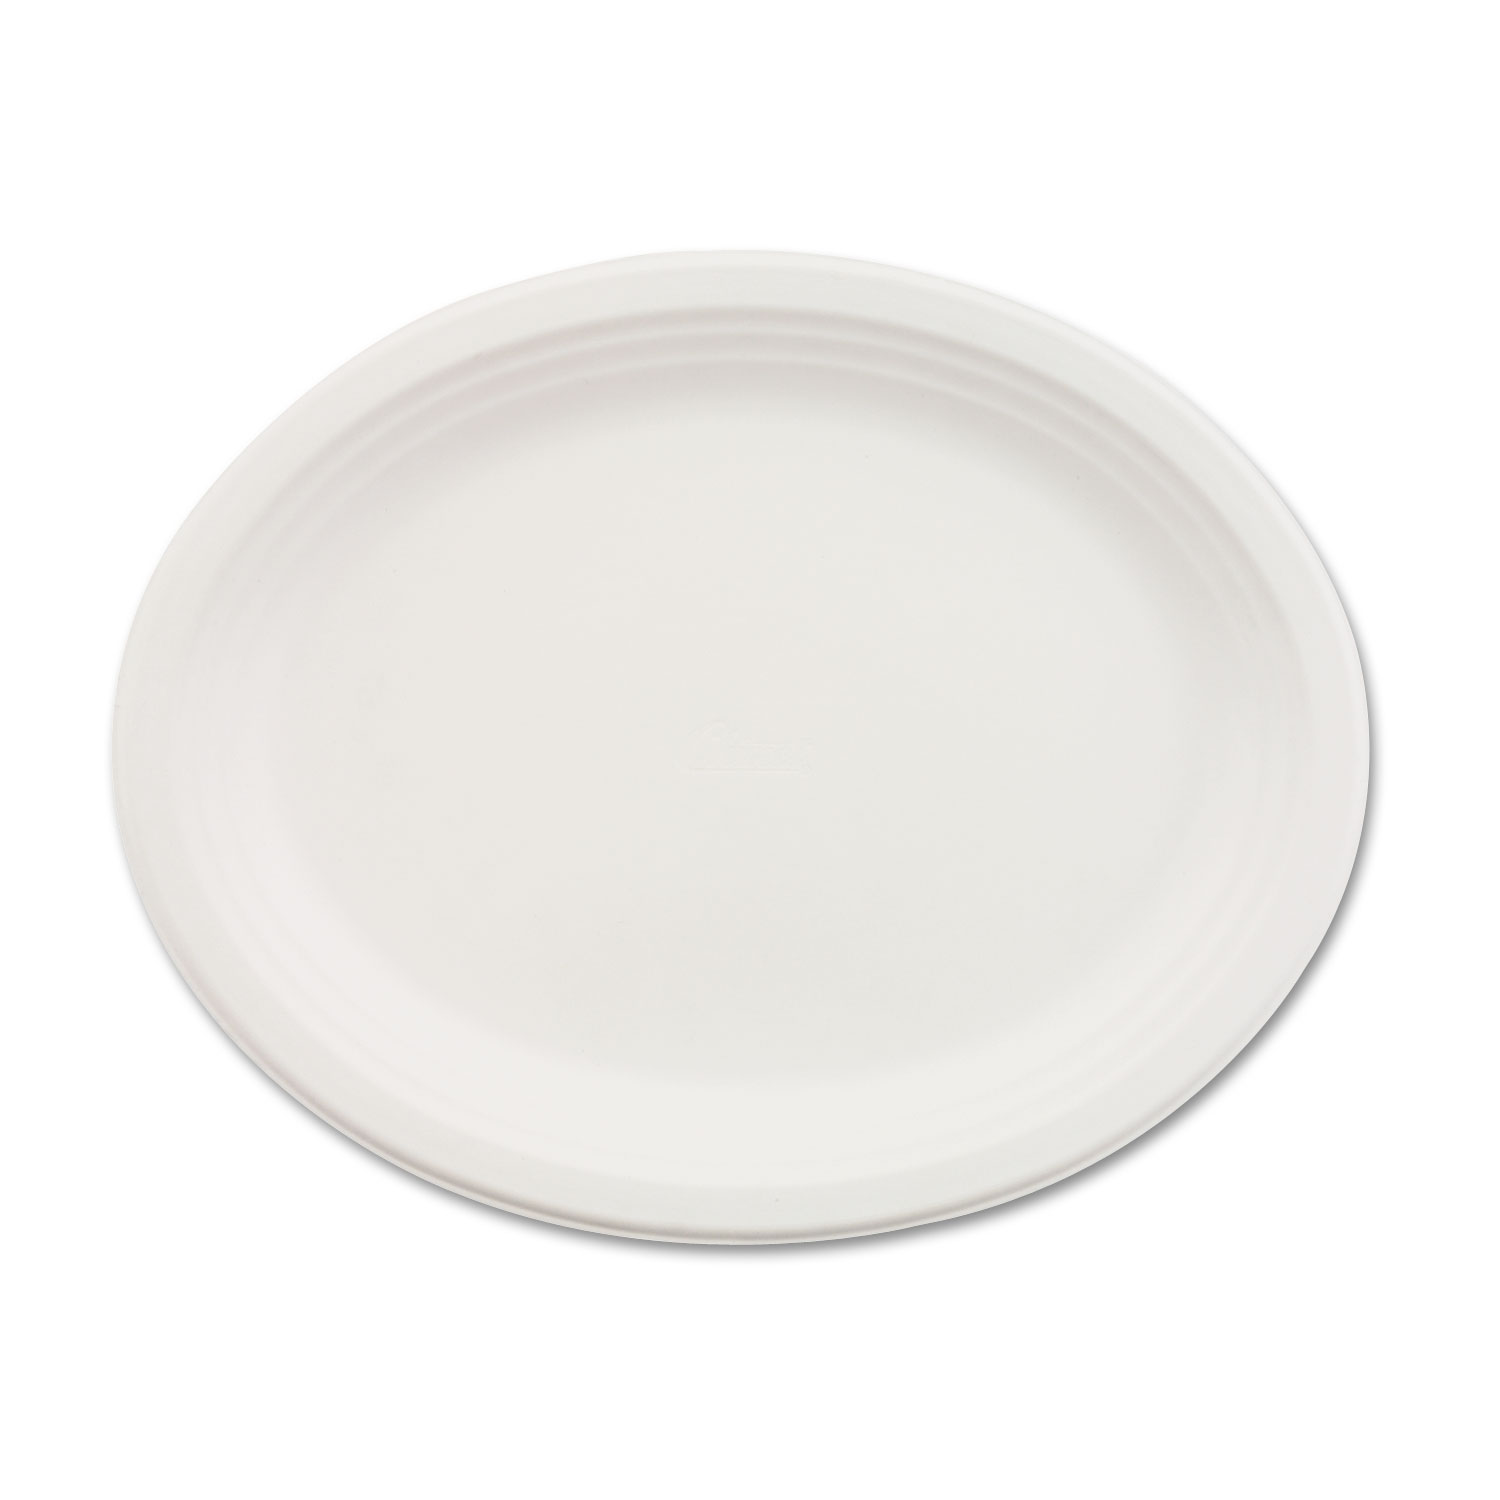  Chinet 21257 Classic Paper Dinnerware, Oval Platter, 9 3/4 x 12 1/2, White, 500/Carton (HUH21257CT) 